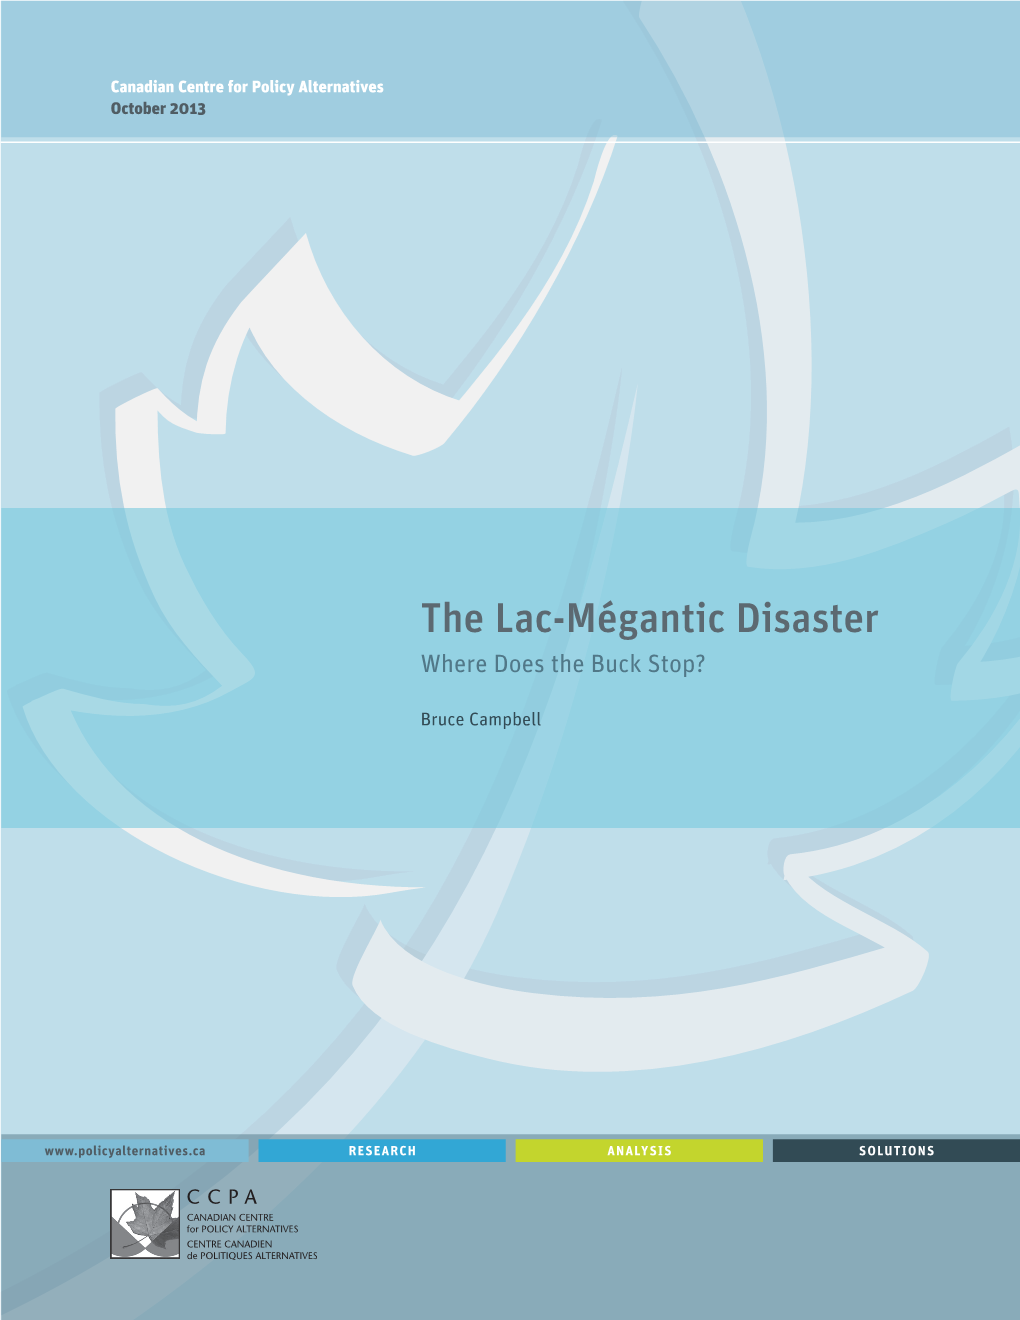 The Lac-Megantic Disaster